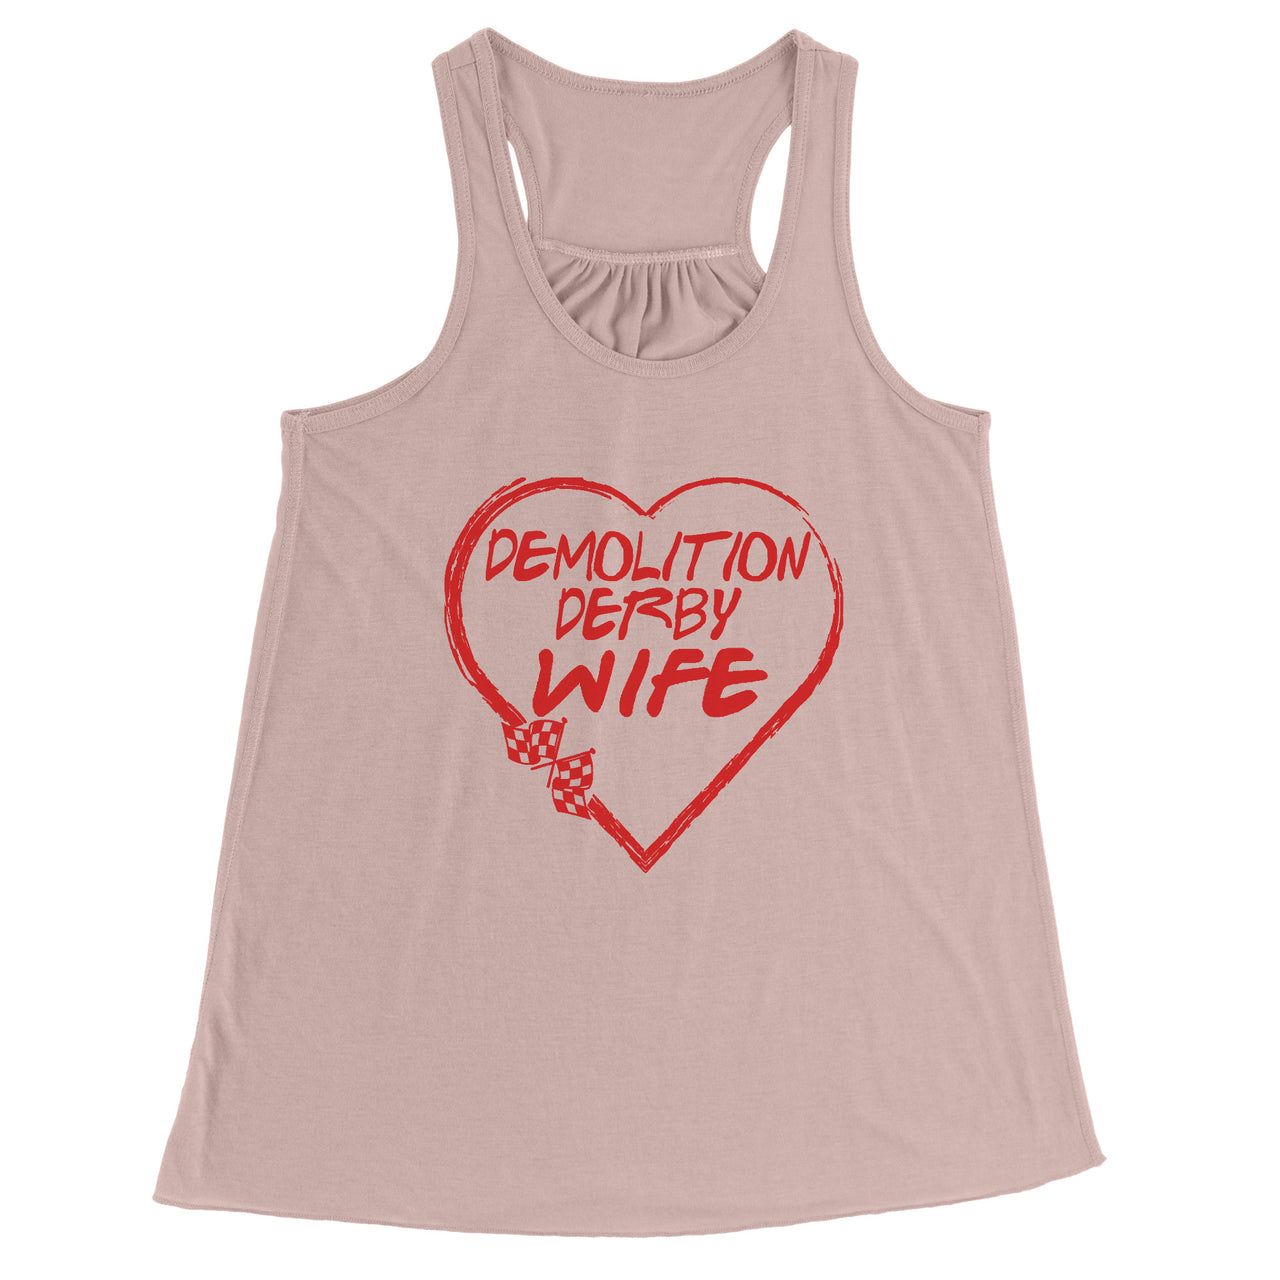 Demolition Derby Wife Heart T-Shirts